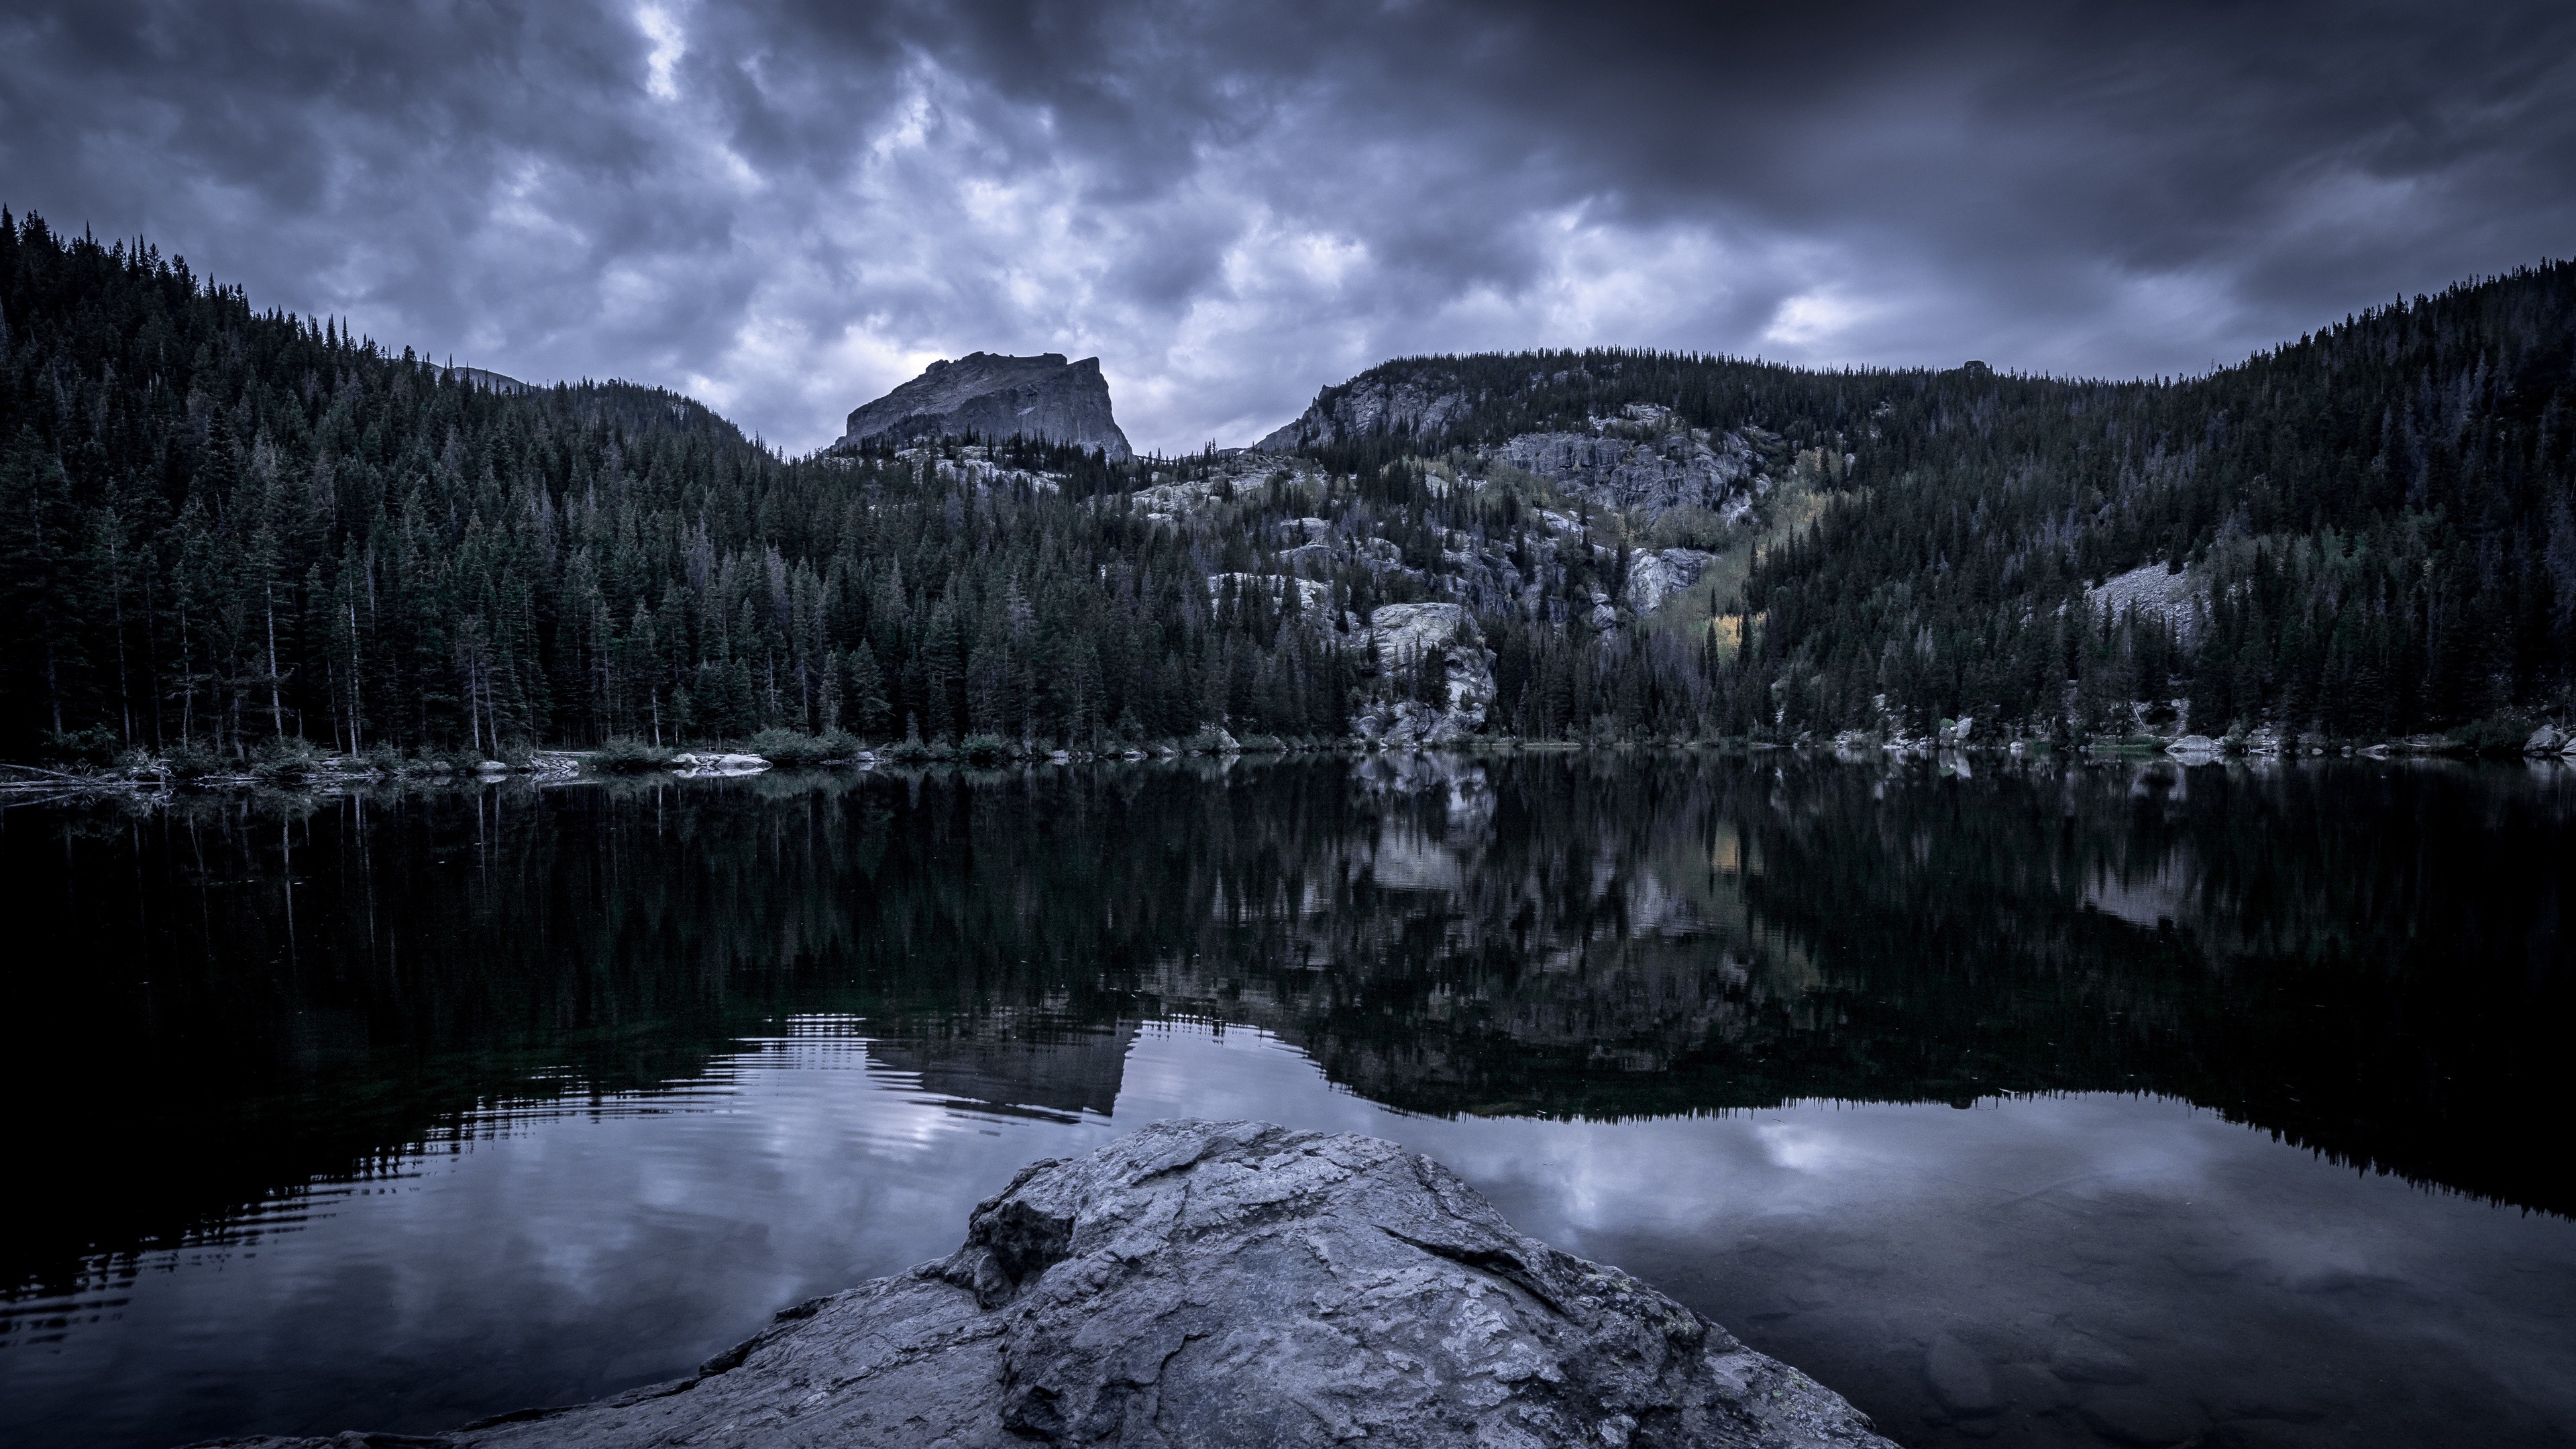 Lake wallpaper, 4K ultra HD, Beautiful nature scenery, Rocky Mountain Park, 3840x2160 4K Desktop